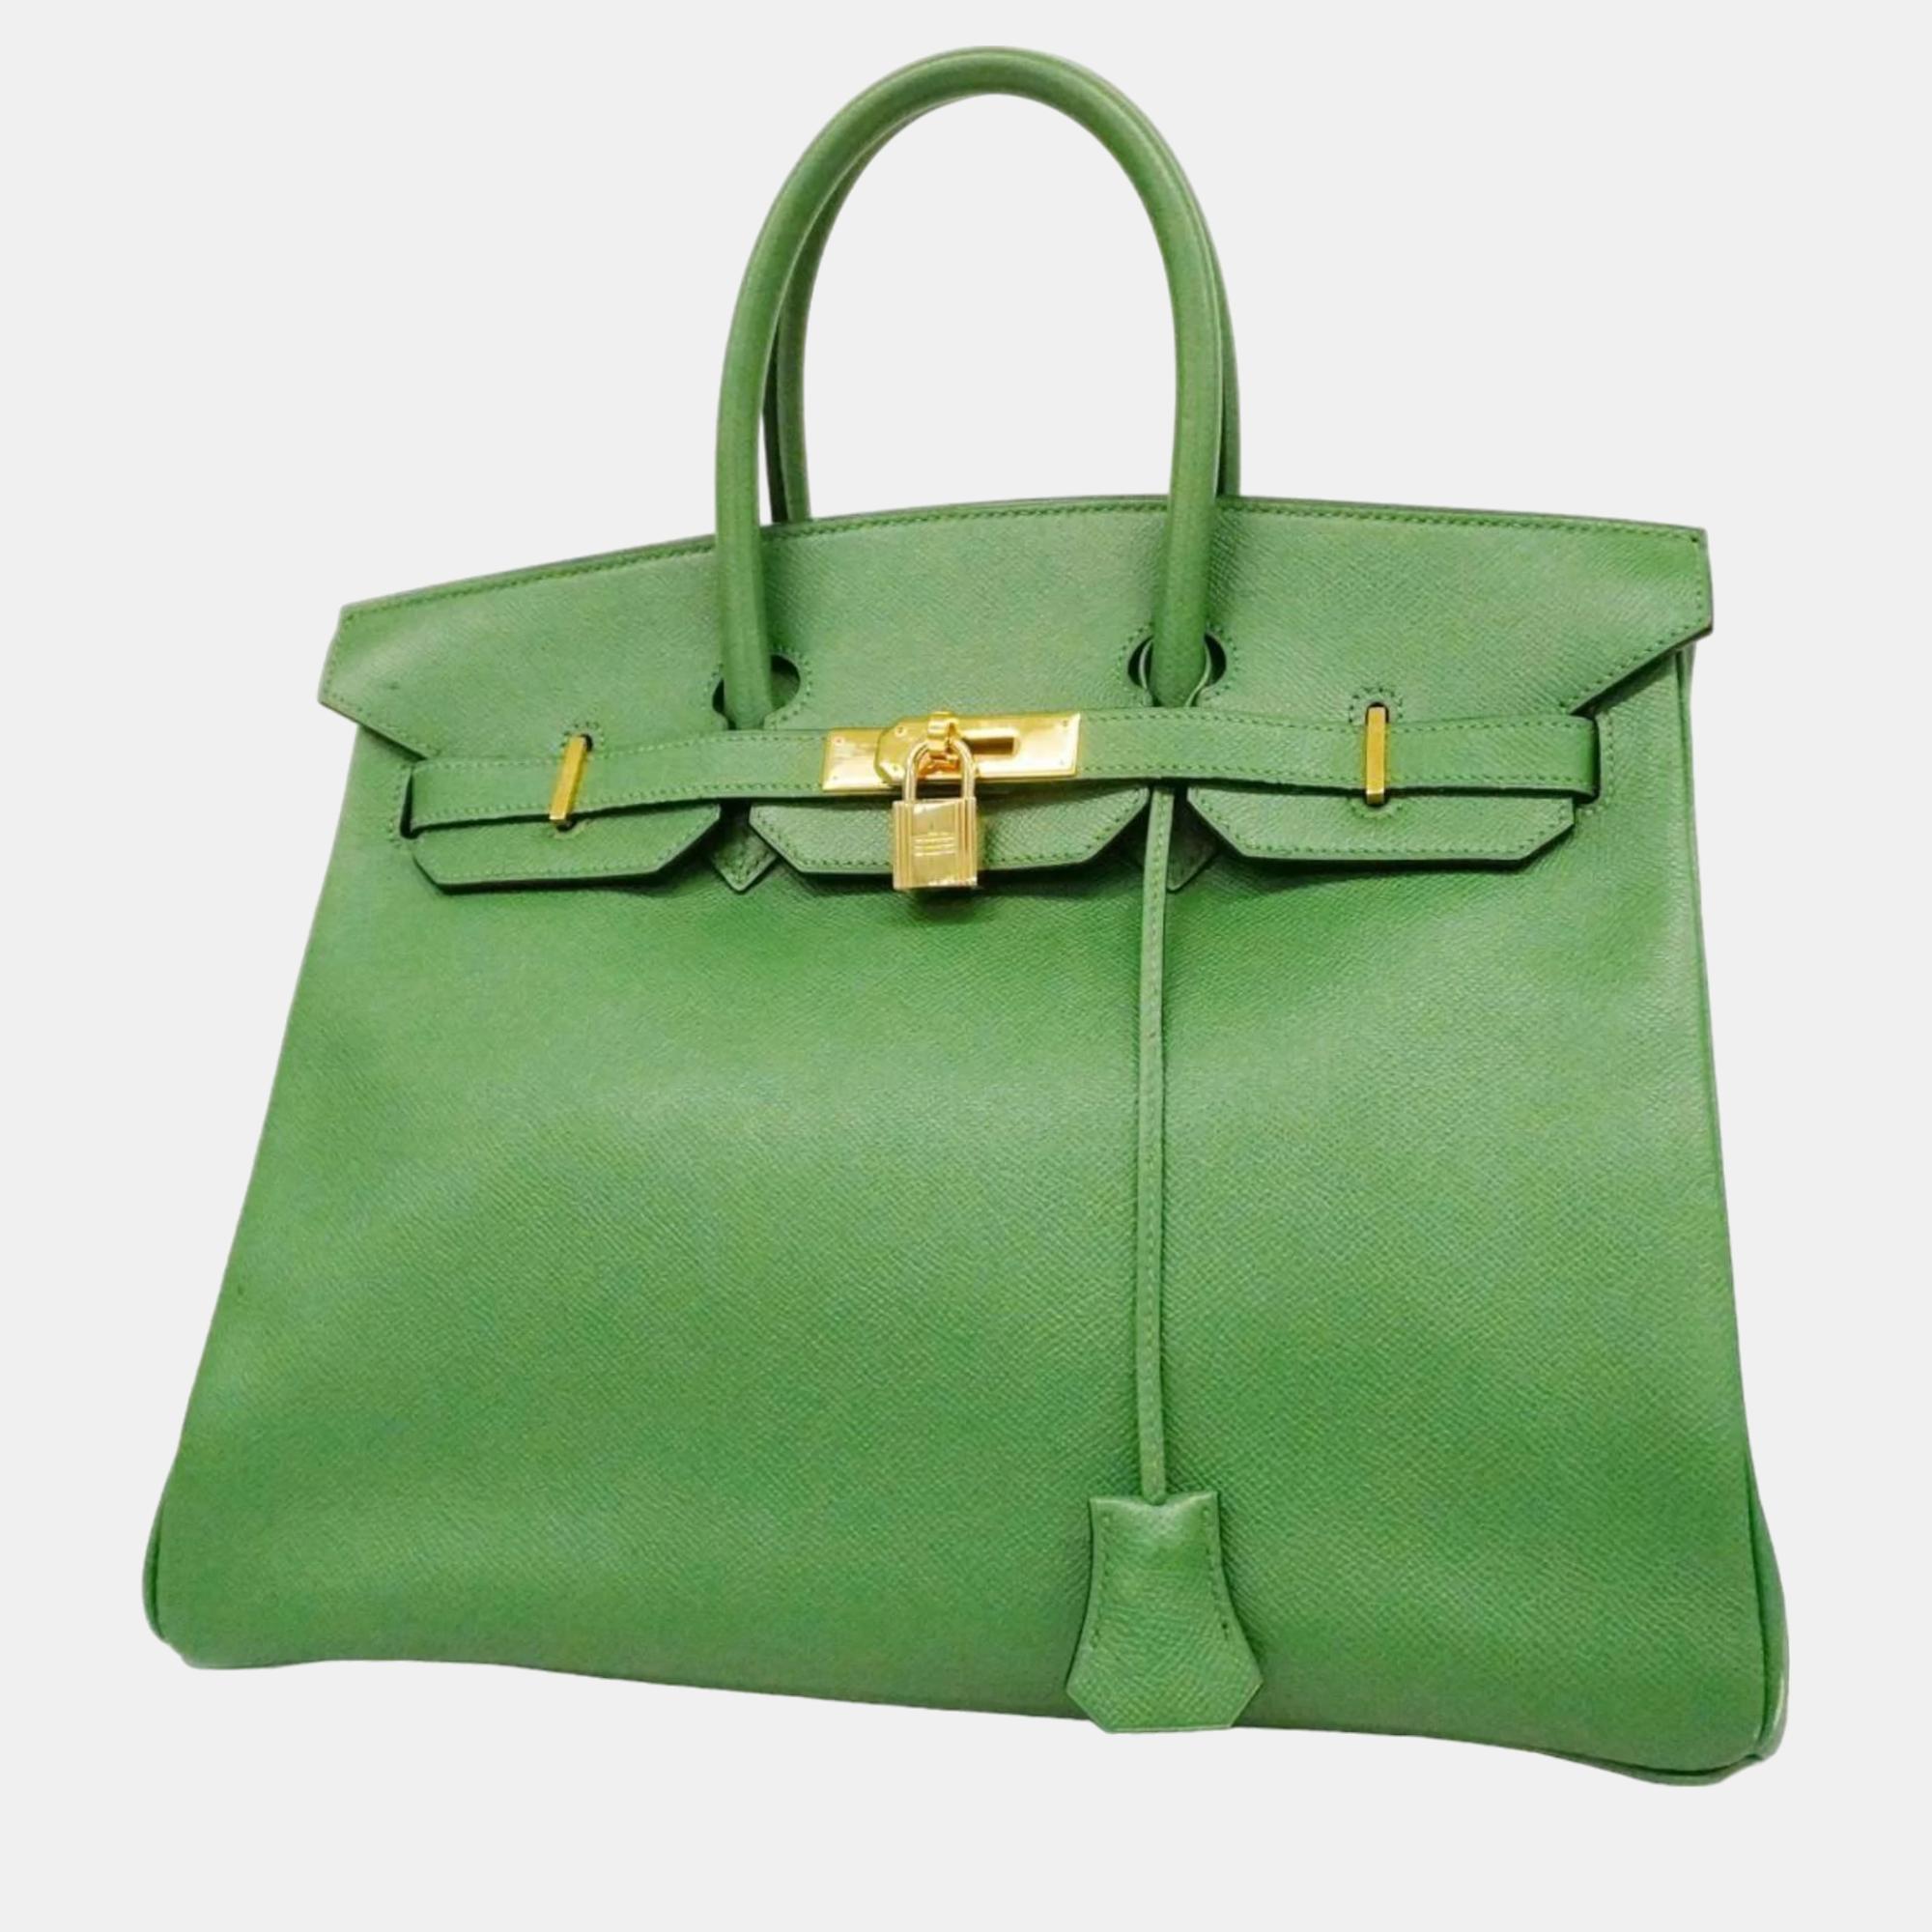 Hermes green couchevel birkin engraved handbag